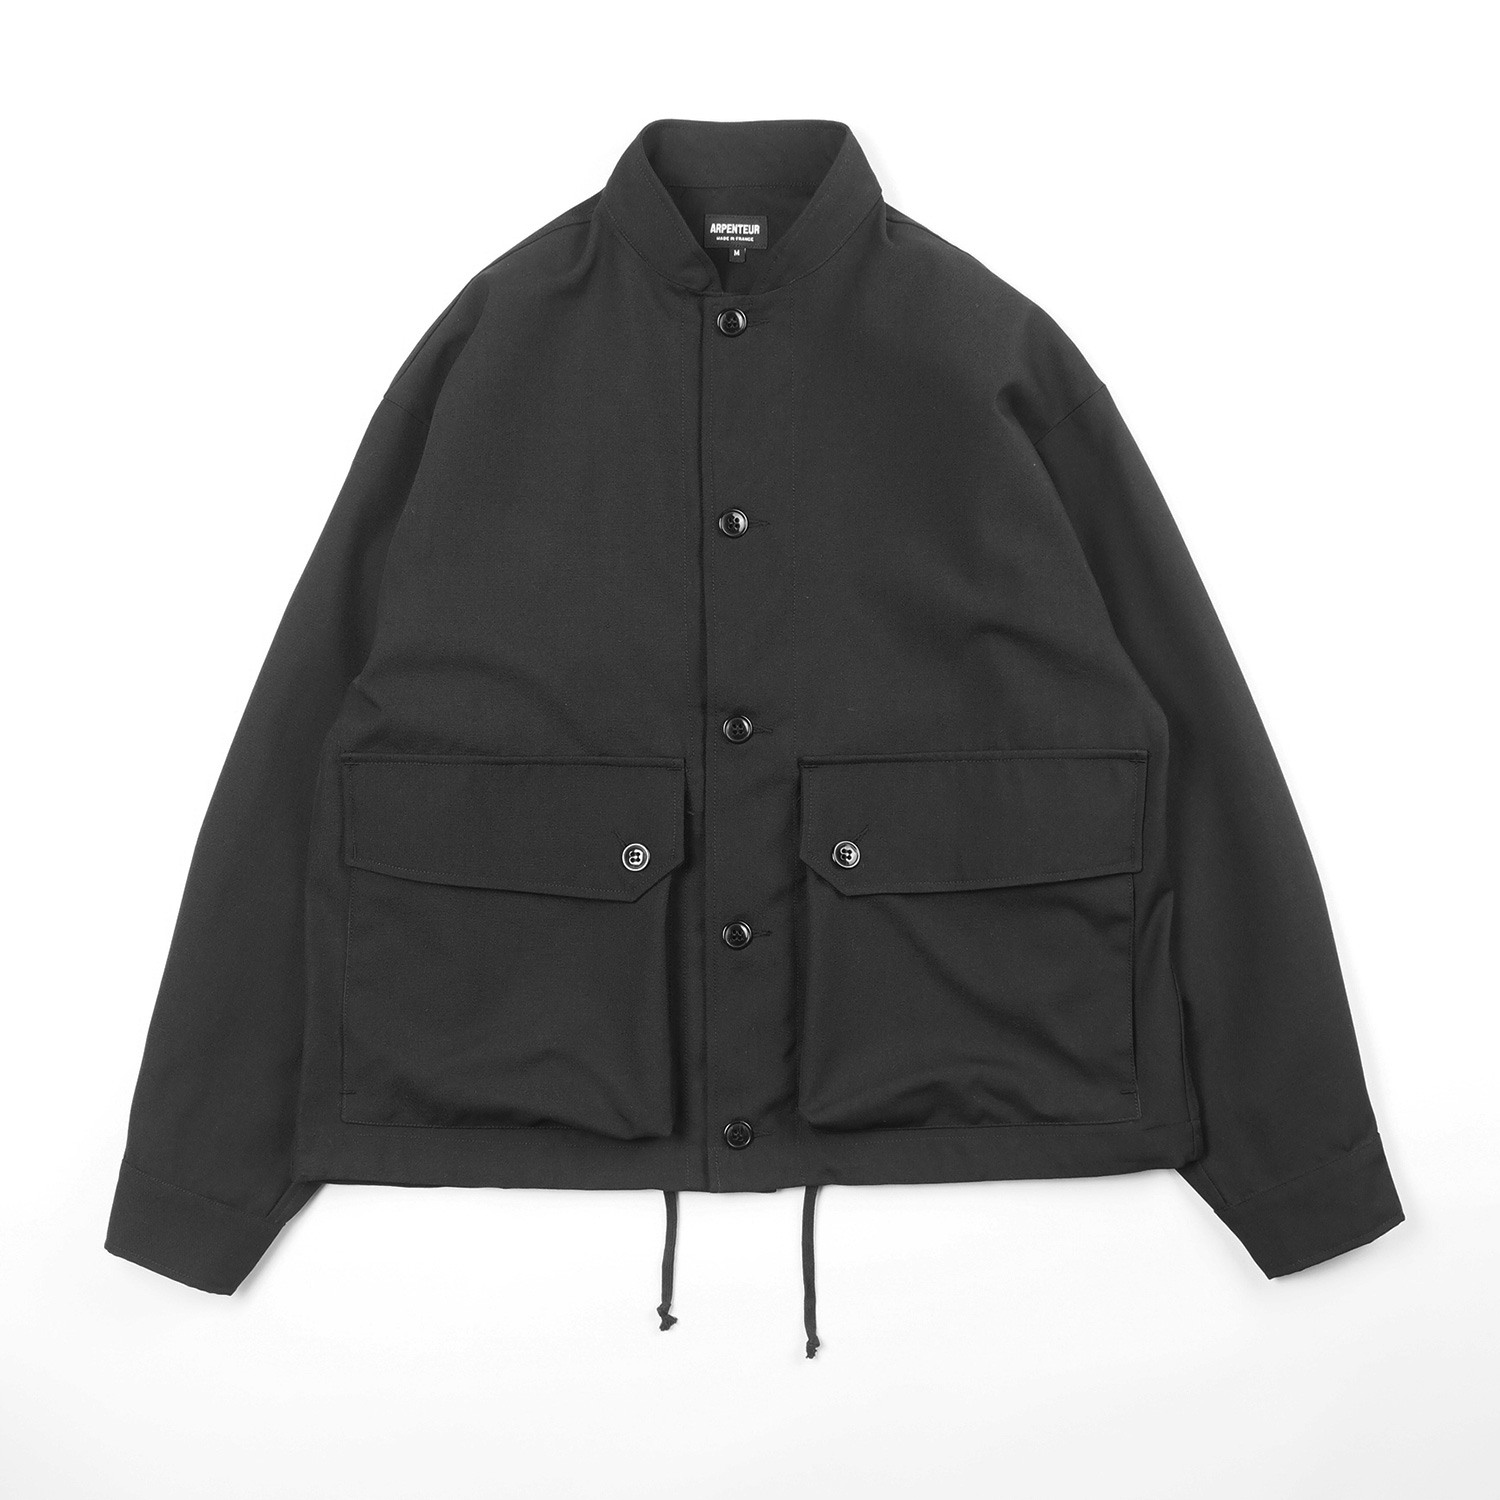 TERA Jacket in Black color by Arpenteur